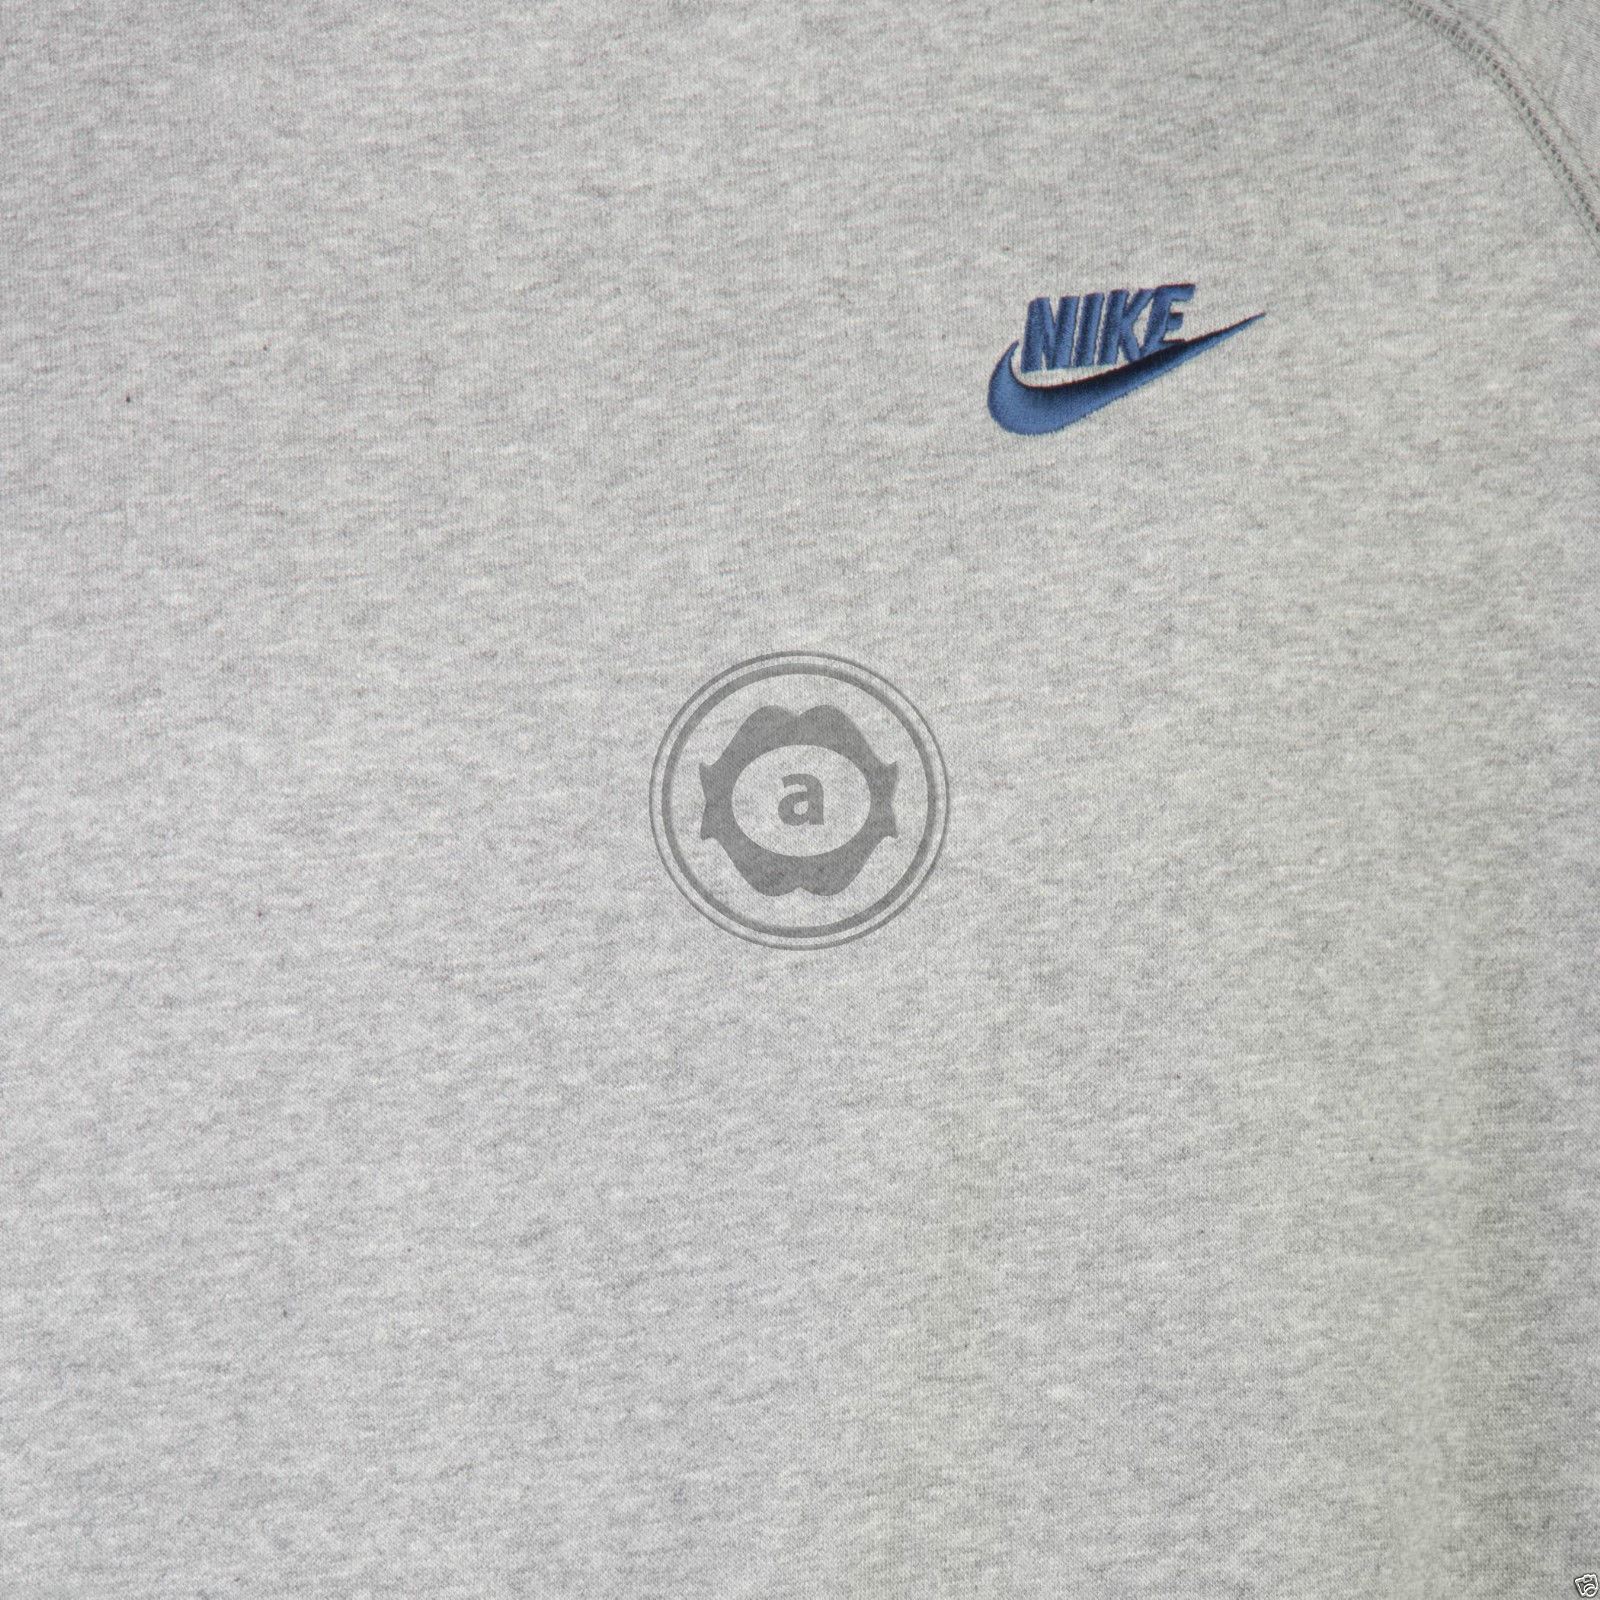 Nike Mens Fleece Lined Sweatshirt Jumper Crew Neck Top Black Blue Grey ...